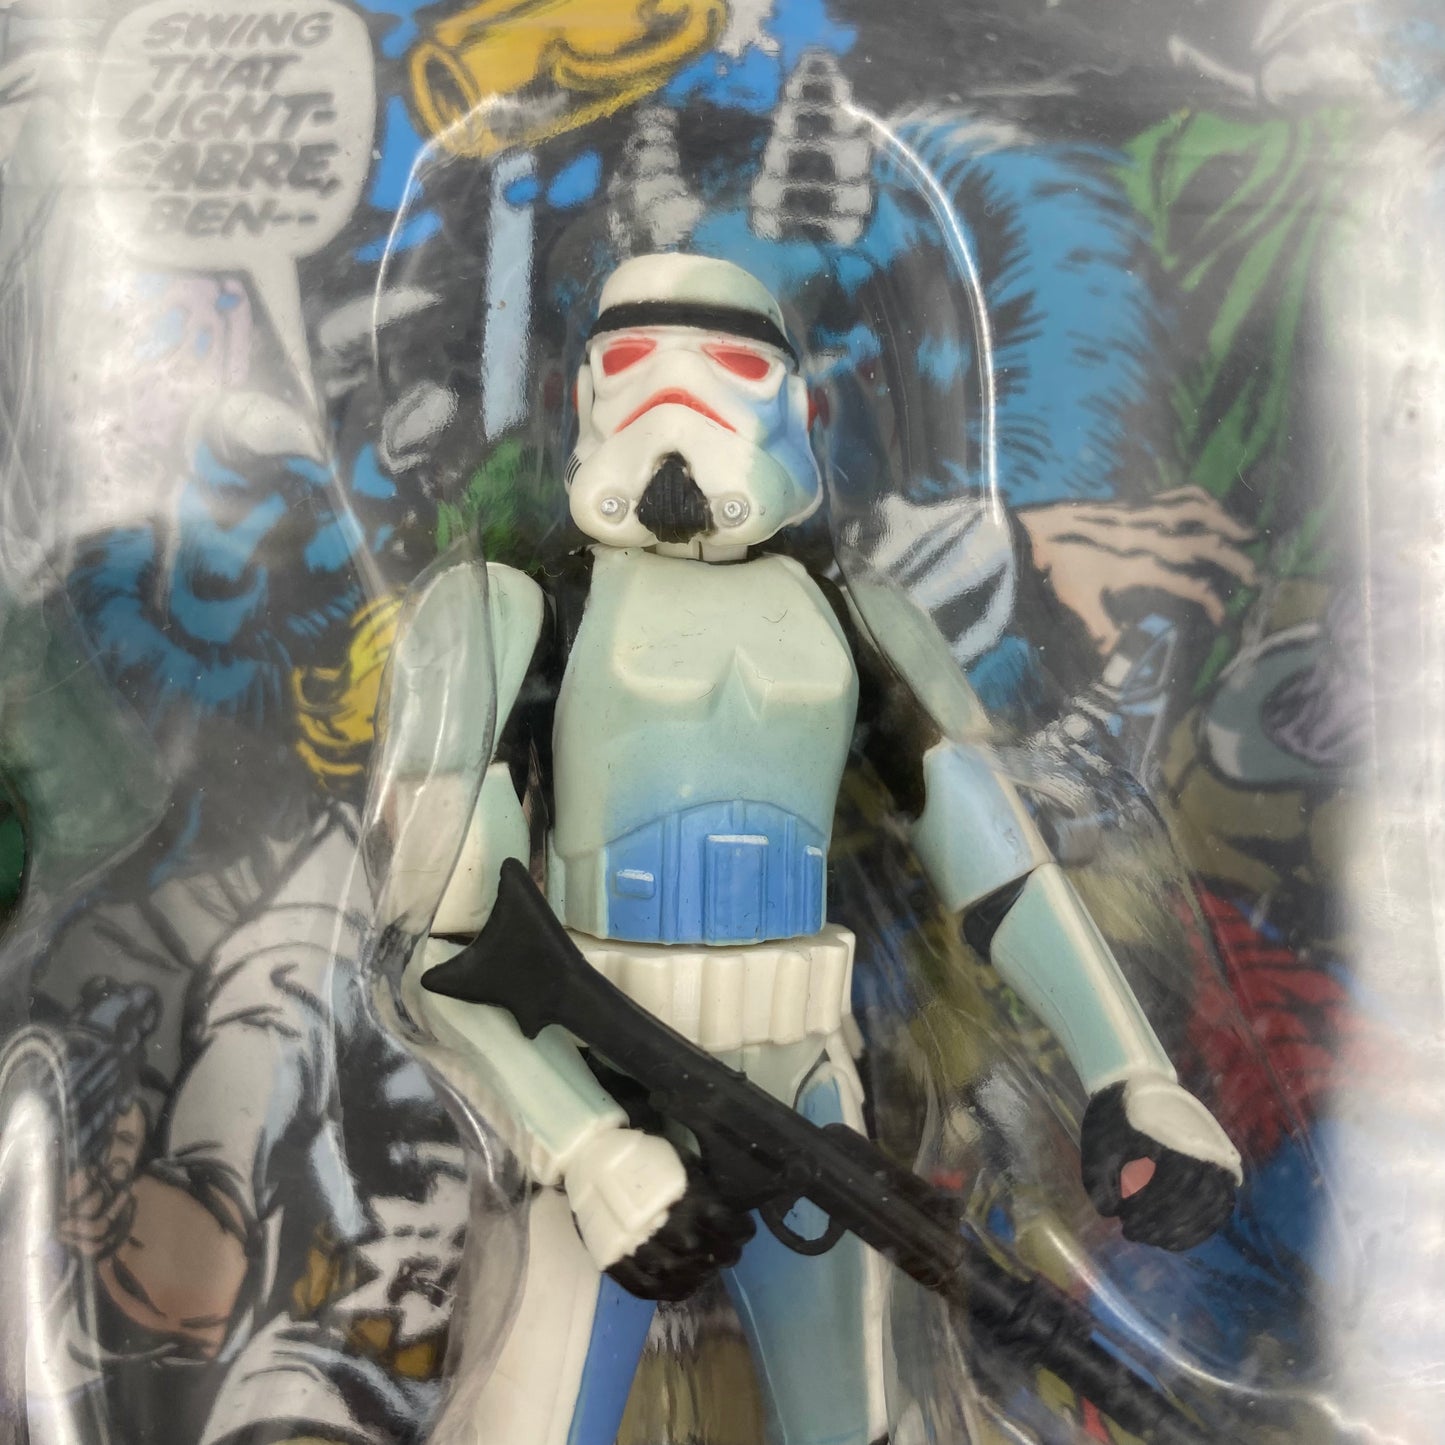 Star Wars Comic Packs #3 Governor Tarkin & Stormtrooper carded 3.75” action figures (2006) Hasbro